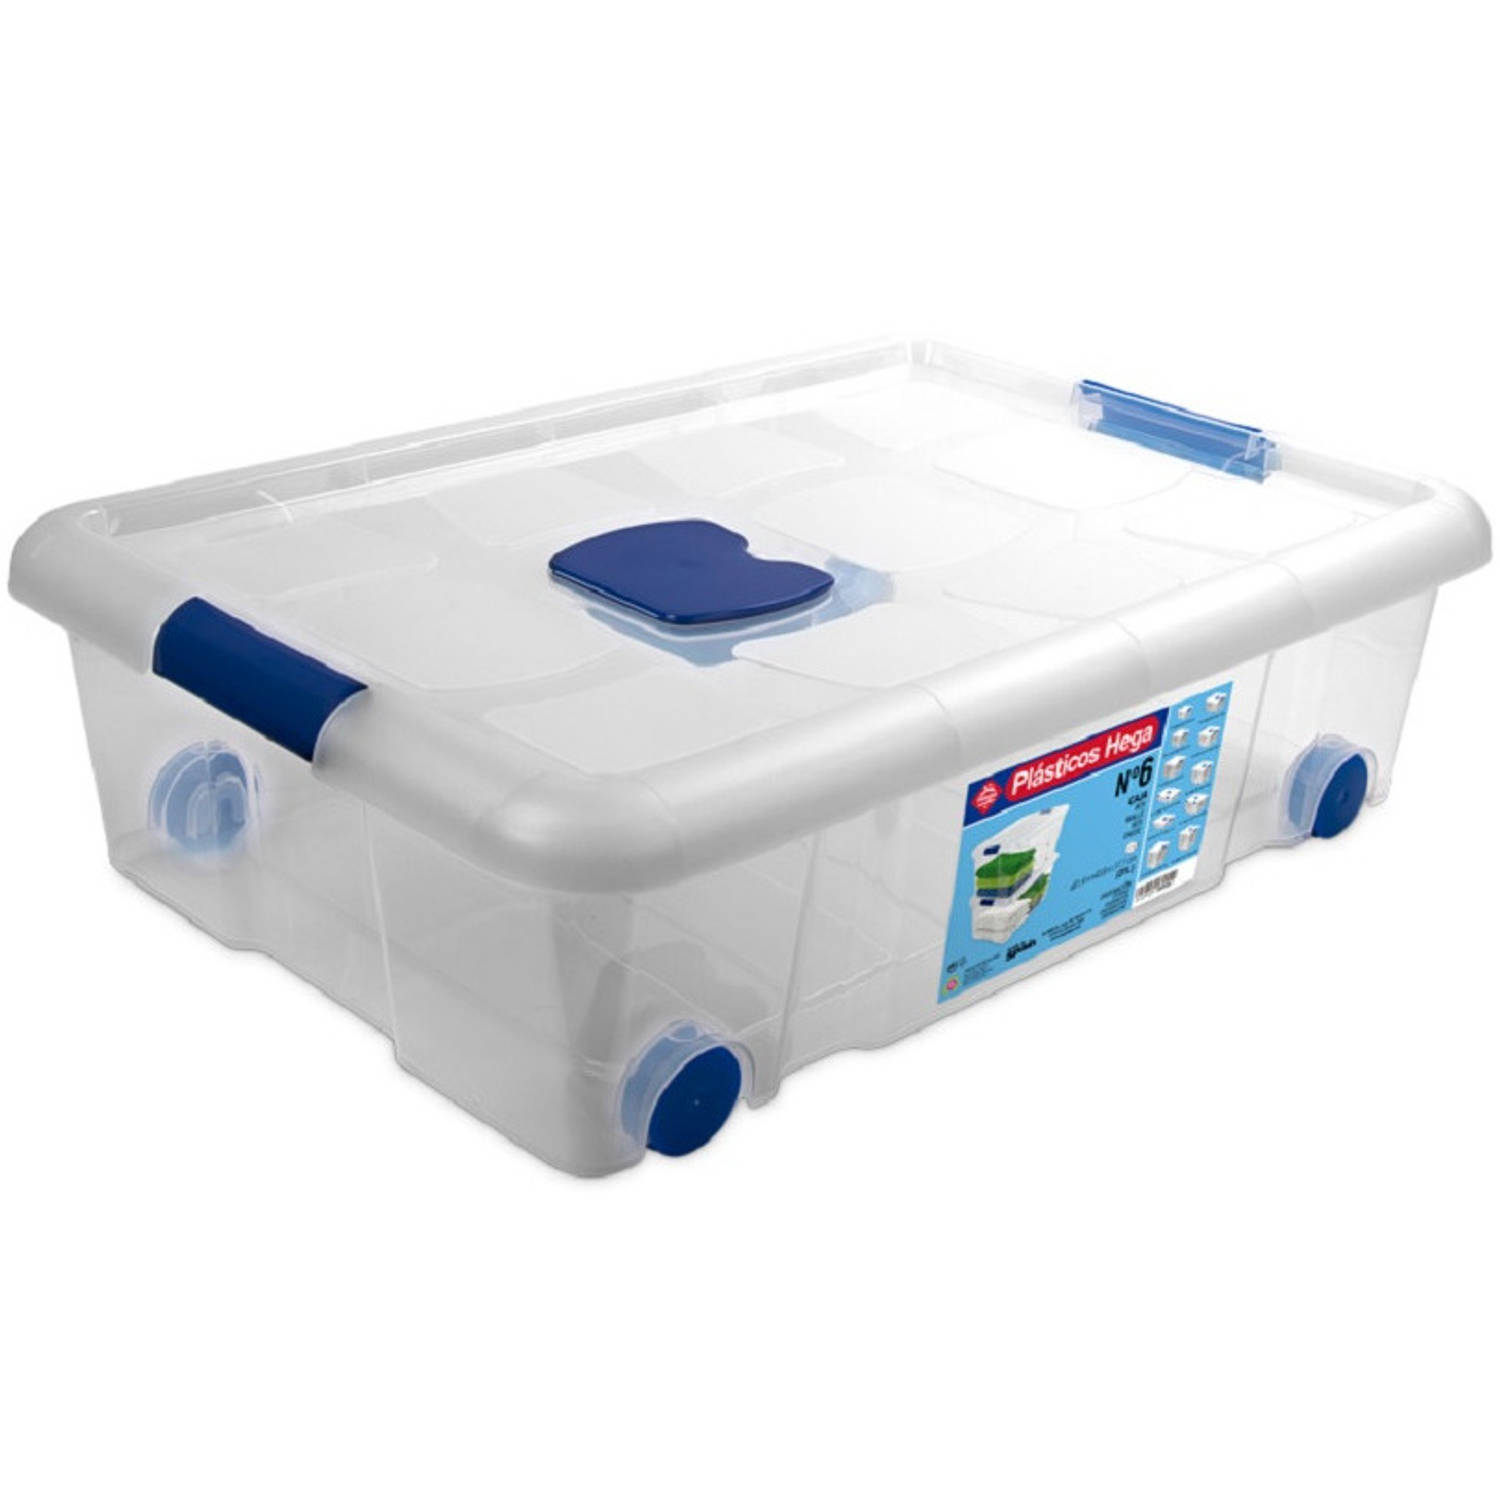 hoek worm Goed gevoel 1x Opbergboxen/opbergdozen met deksel en wieltjes 31 liter kunststof  transparant/blauw - Opbergbox | Blokker